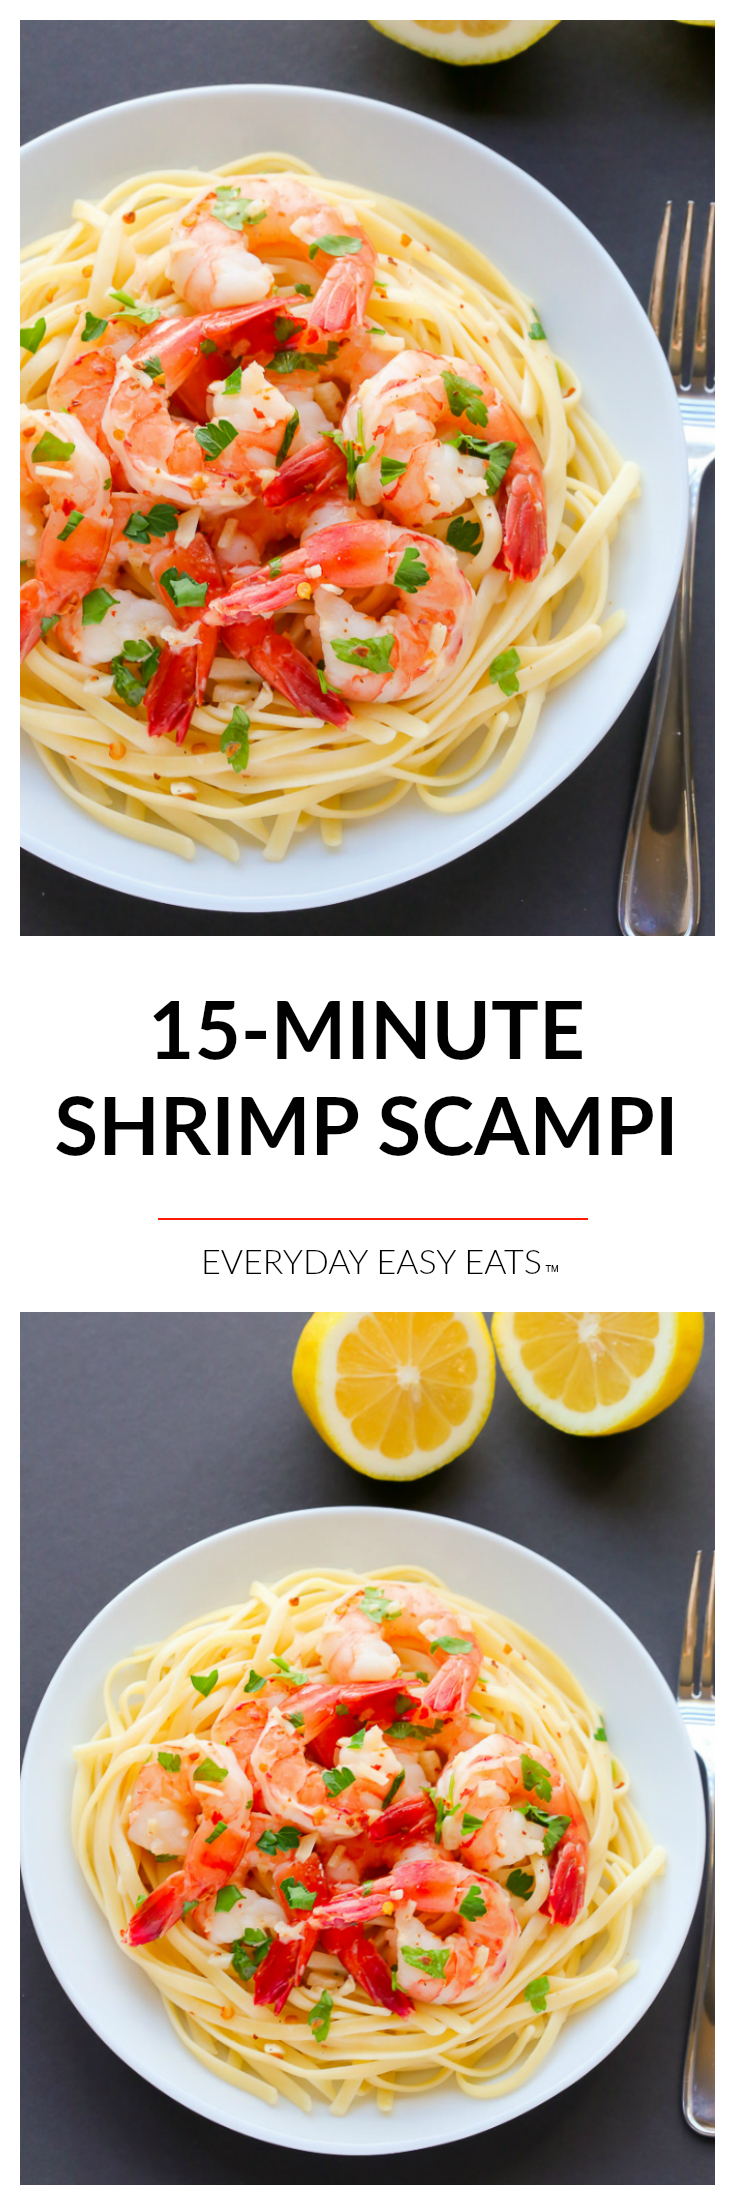 Shrimp Scampi - This 15-Minute recipe is elegant, impressive and so simple to make. | EverydayEasyEats.com